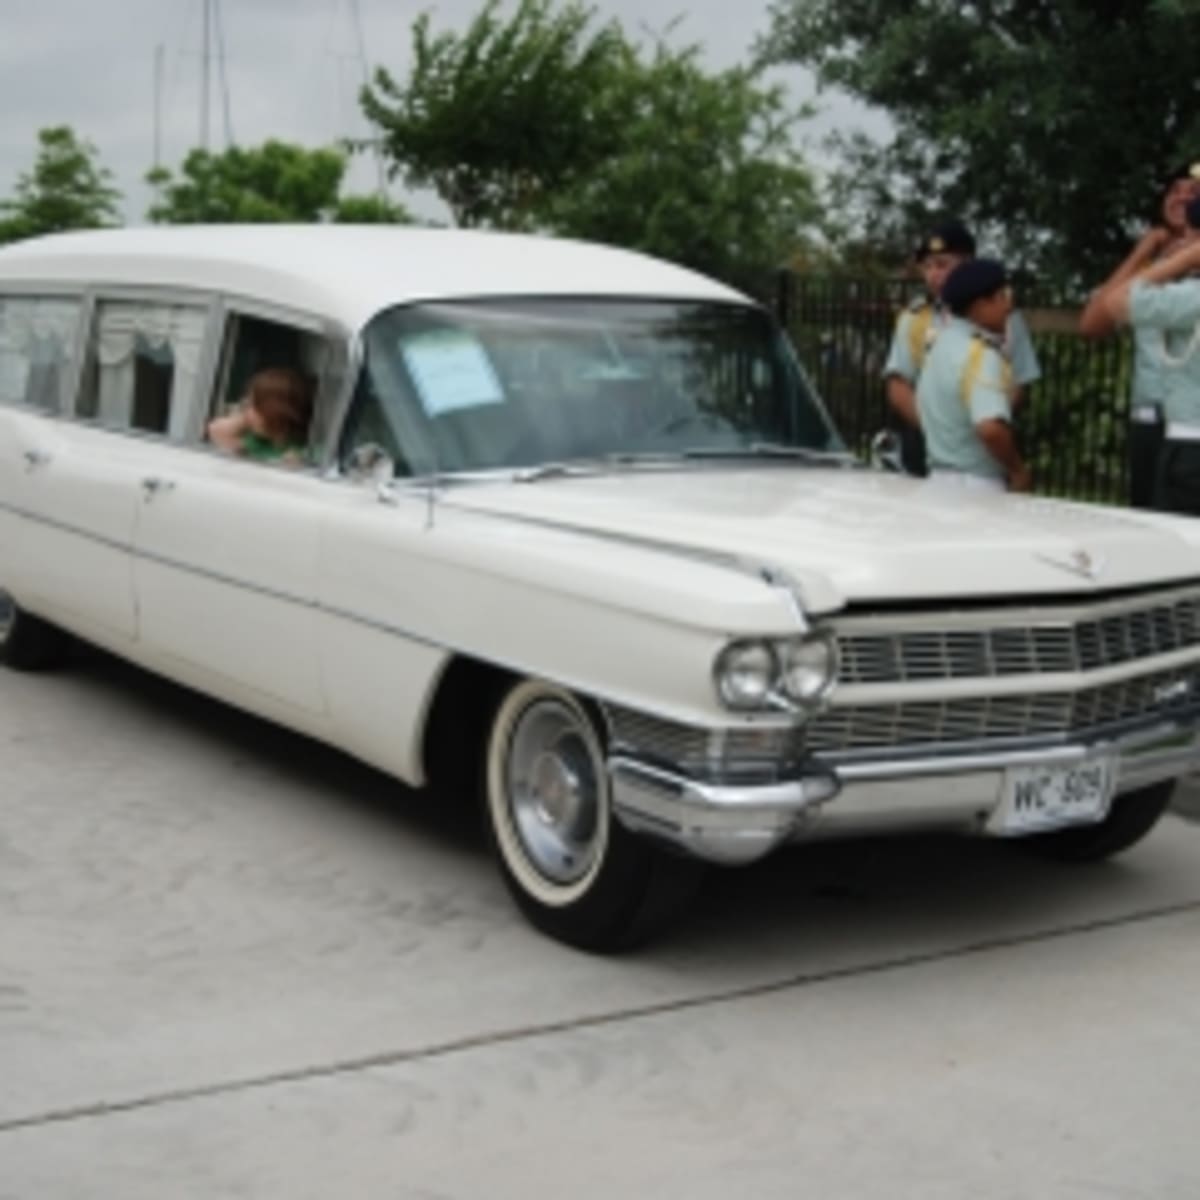 Despite its history, JFK hearse sells for bargain price